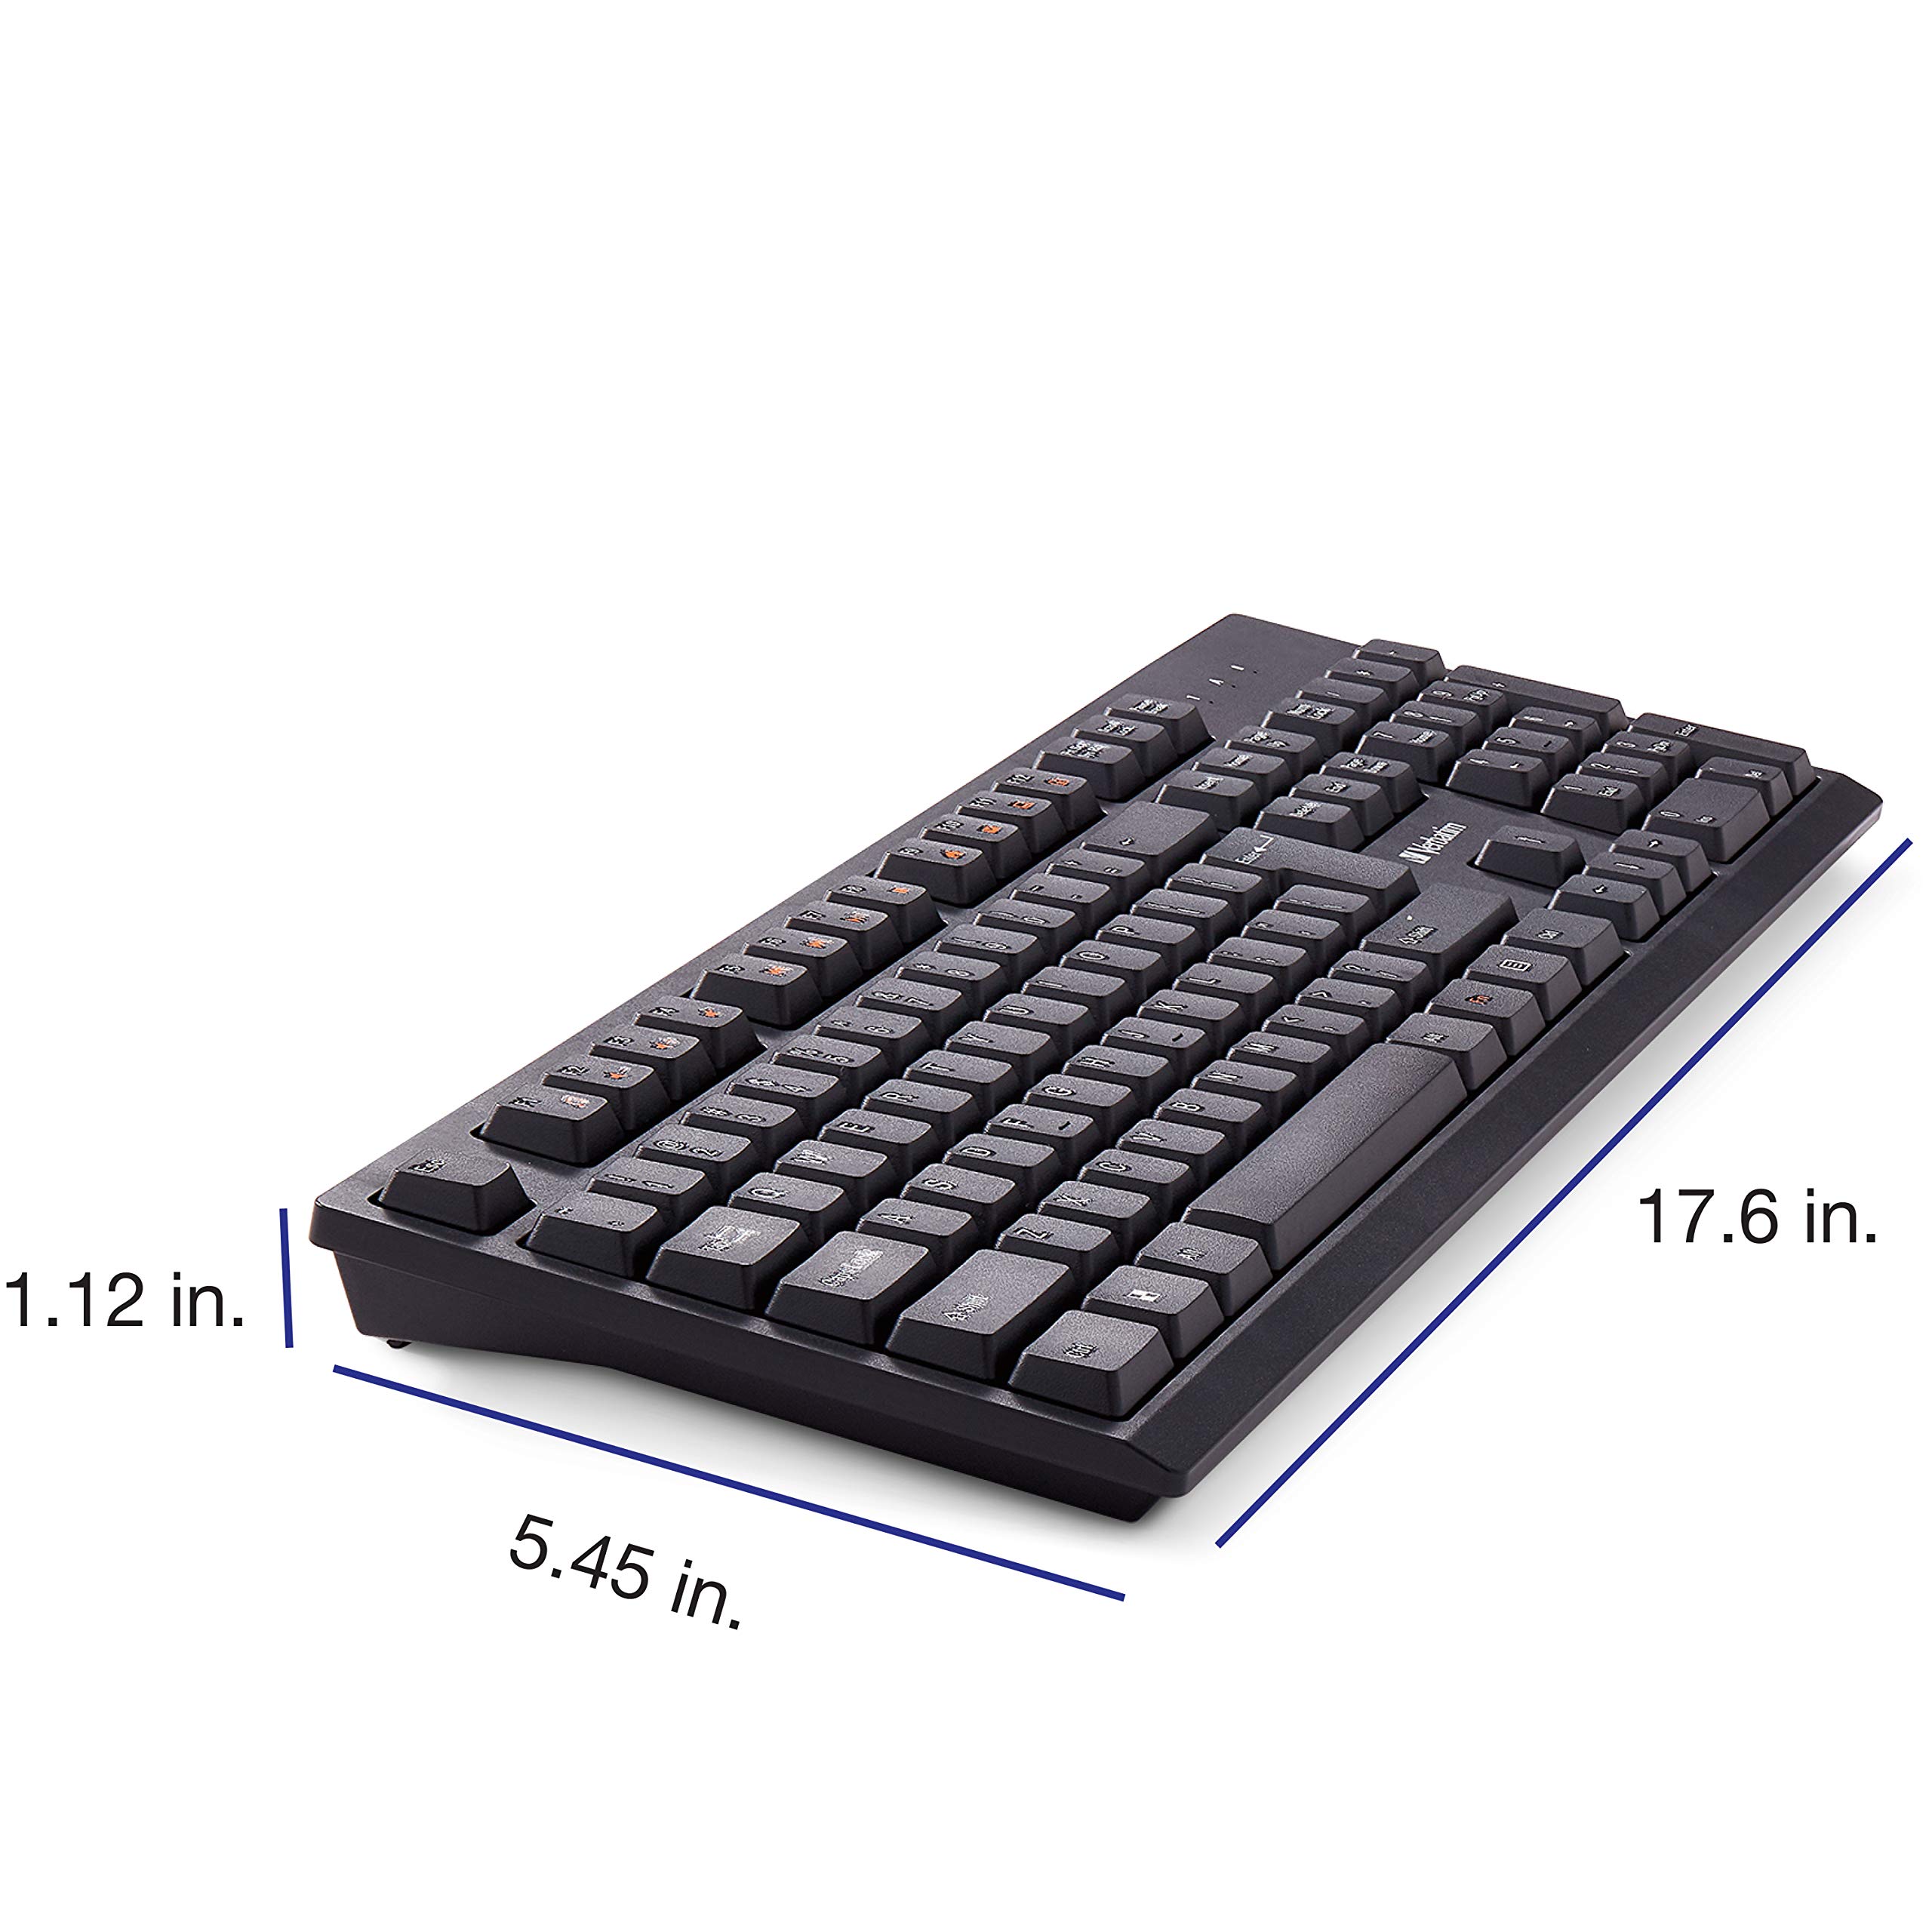 Verbatim USB Wireless Keyboard and Mouse Combo